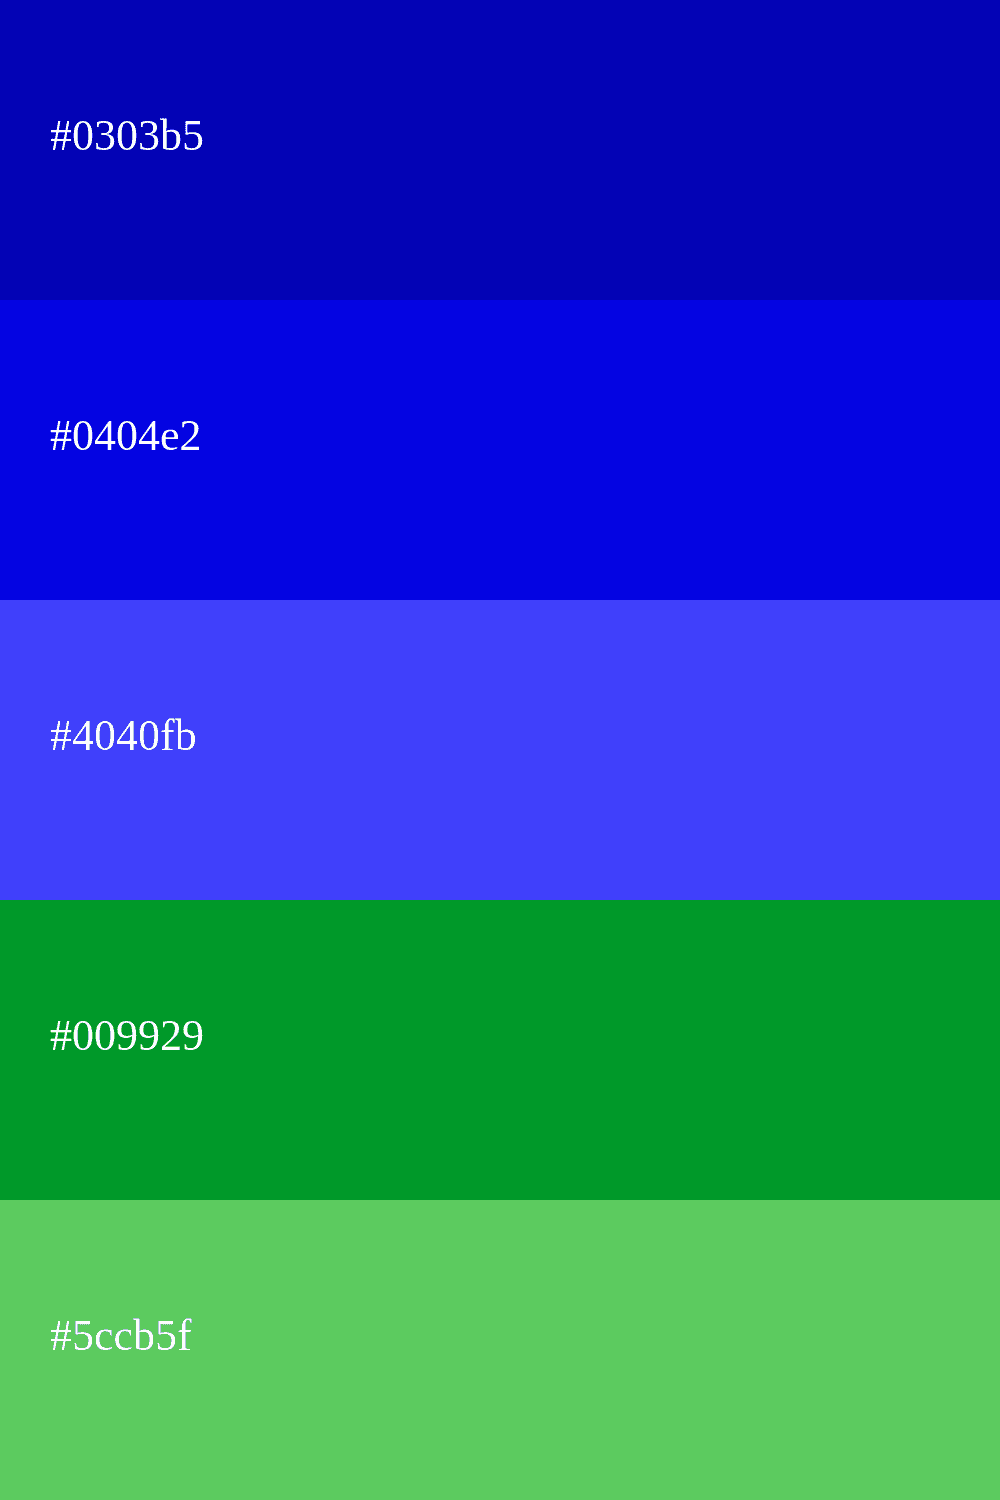 azul royal e verde